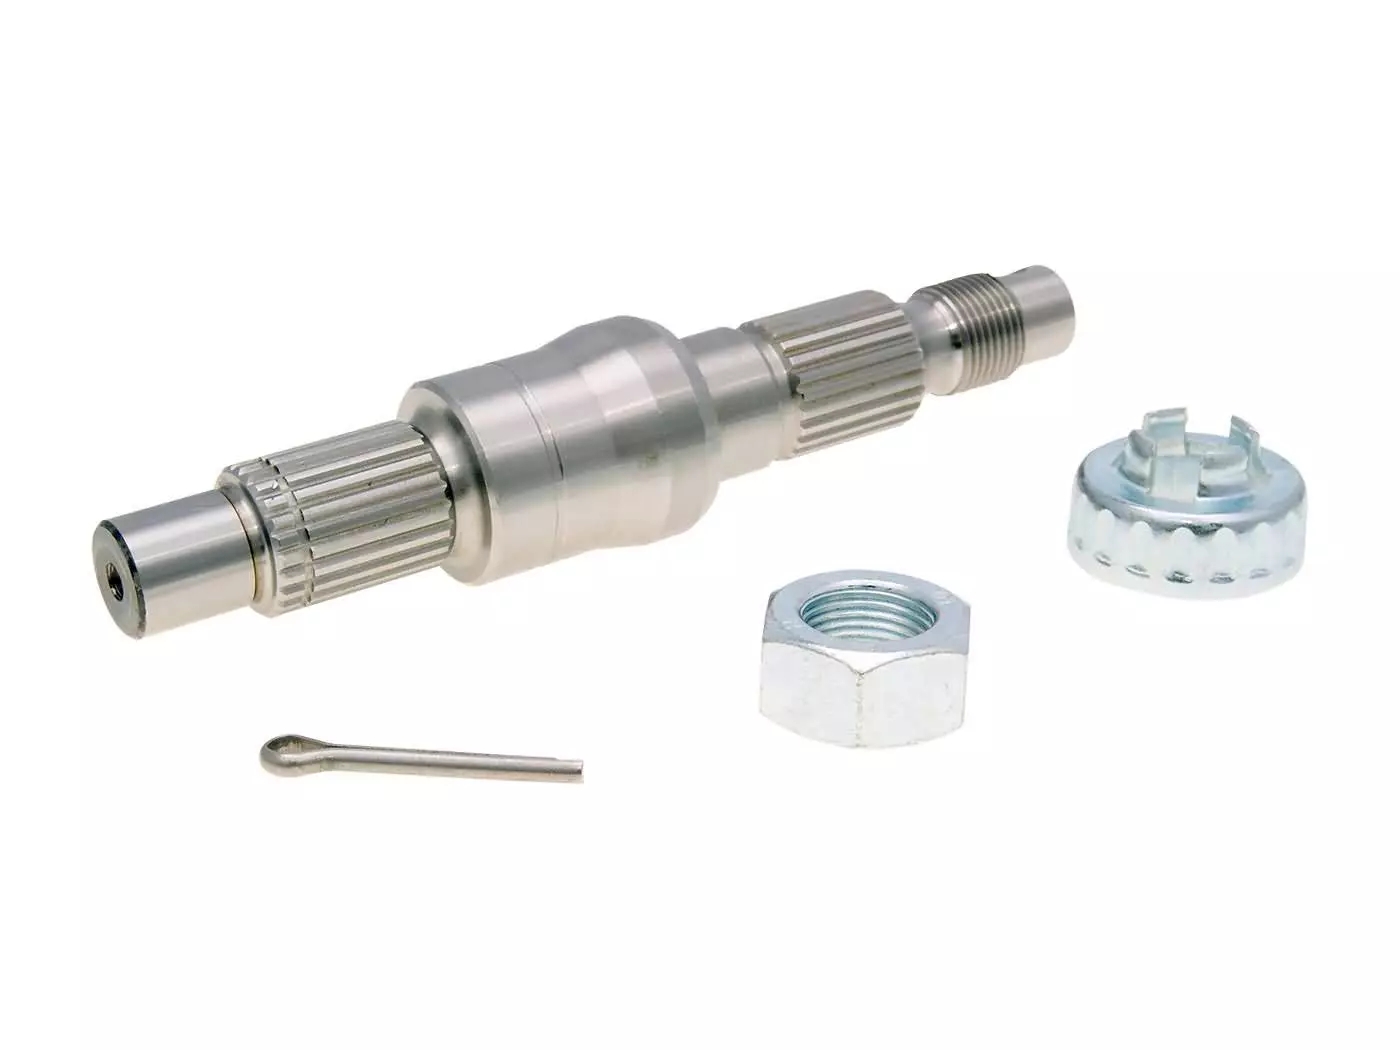 Transmission Output Shaft 143mm Incl. Nut, Crown Nut, Splint For Piaggio, Vespa 125, 150cc 2-stroke (-1999)